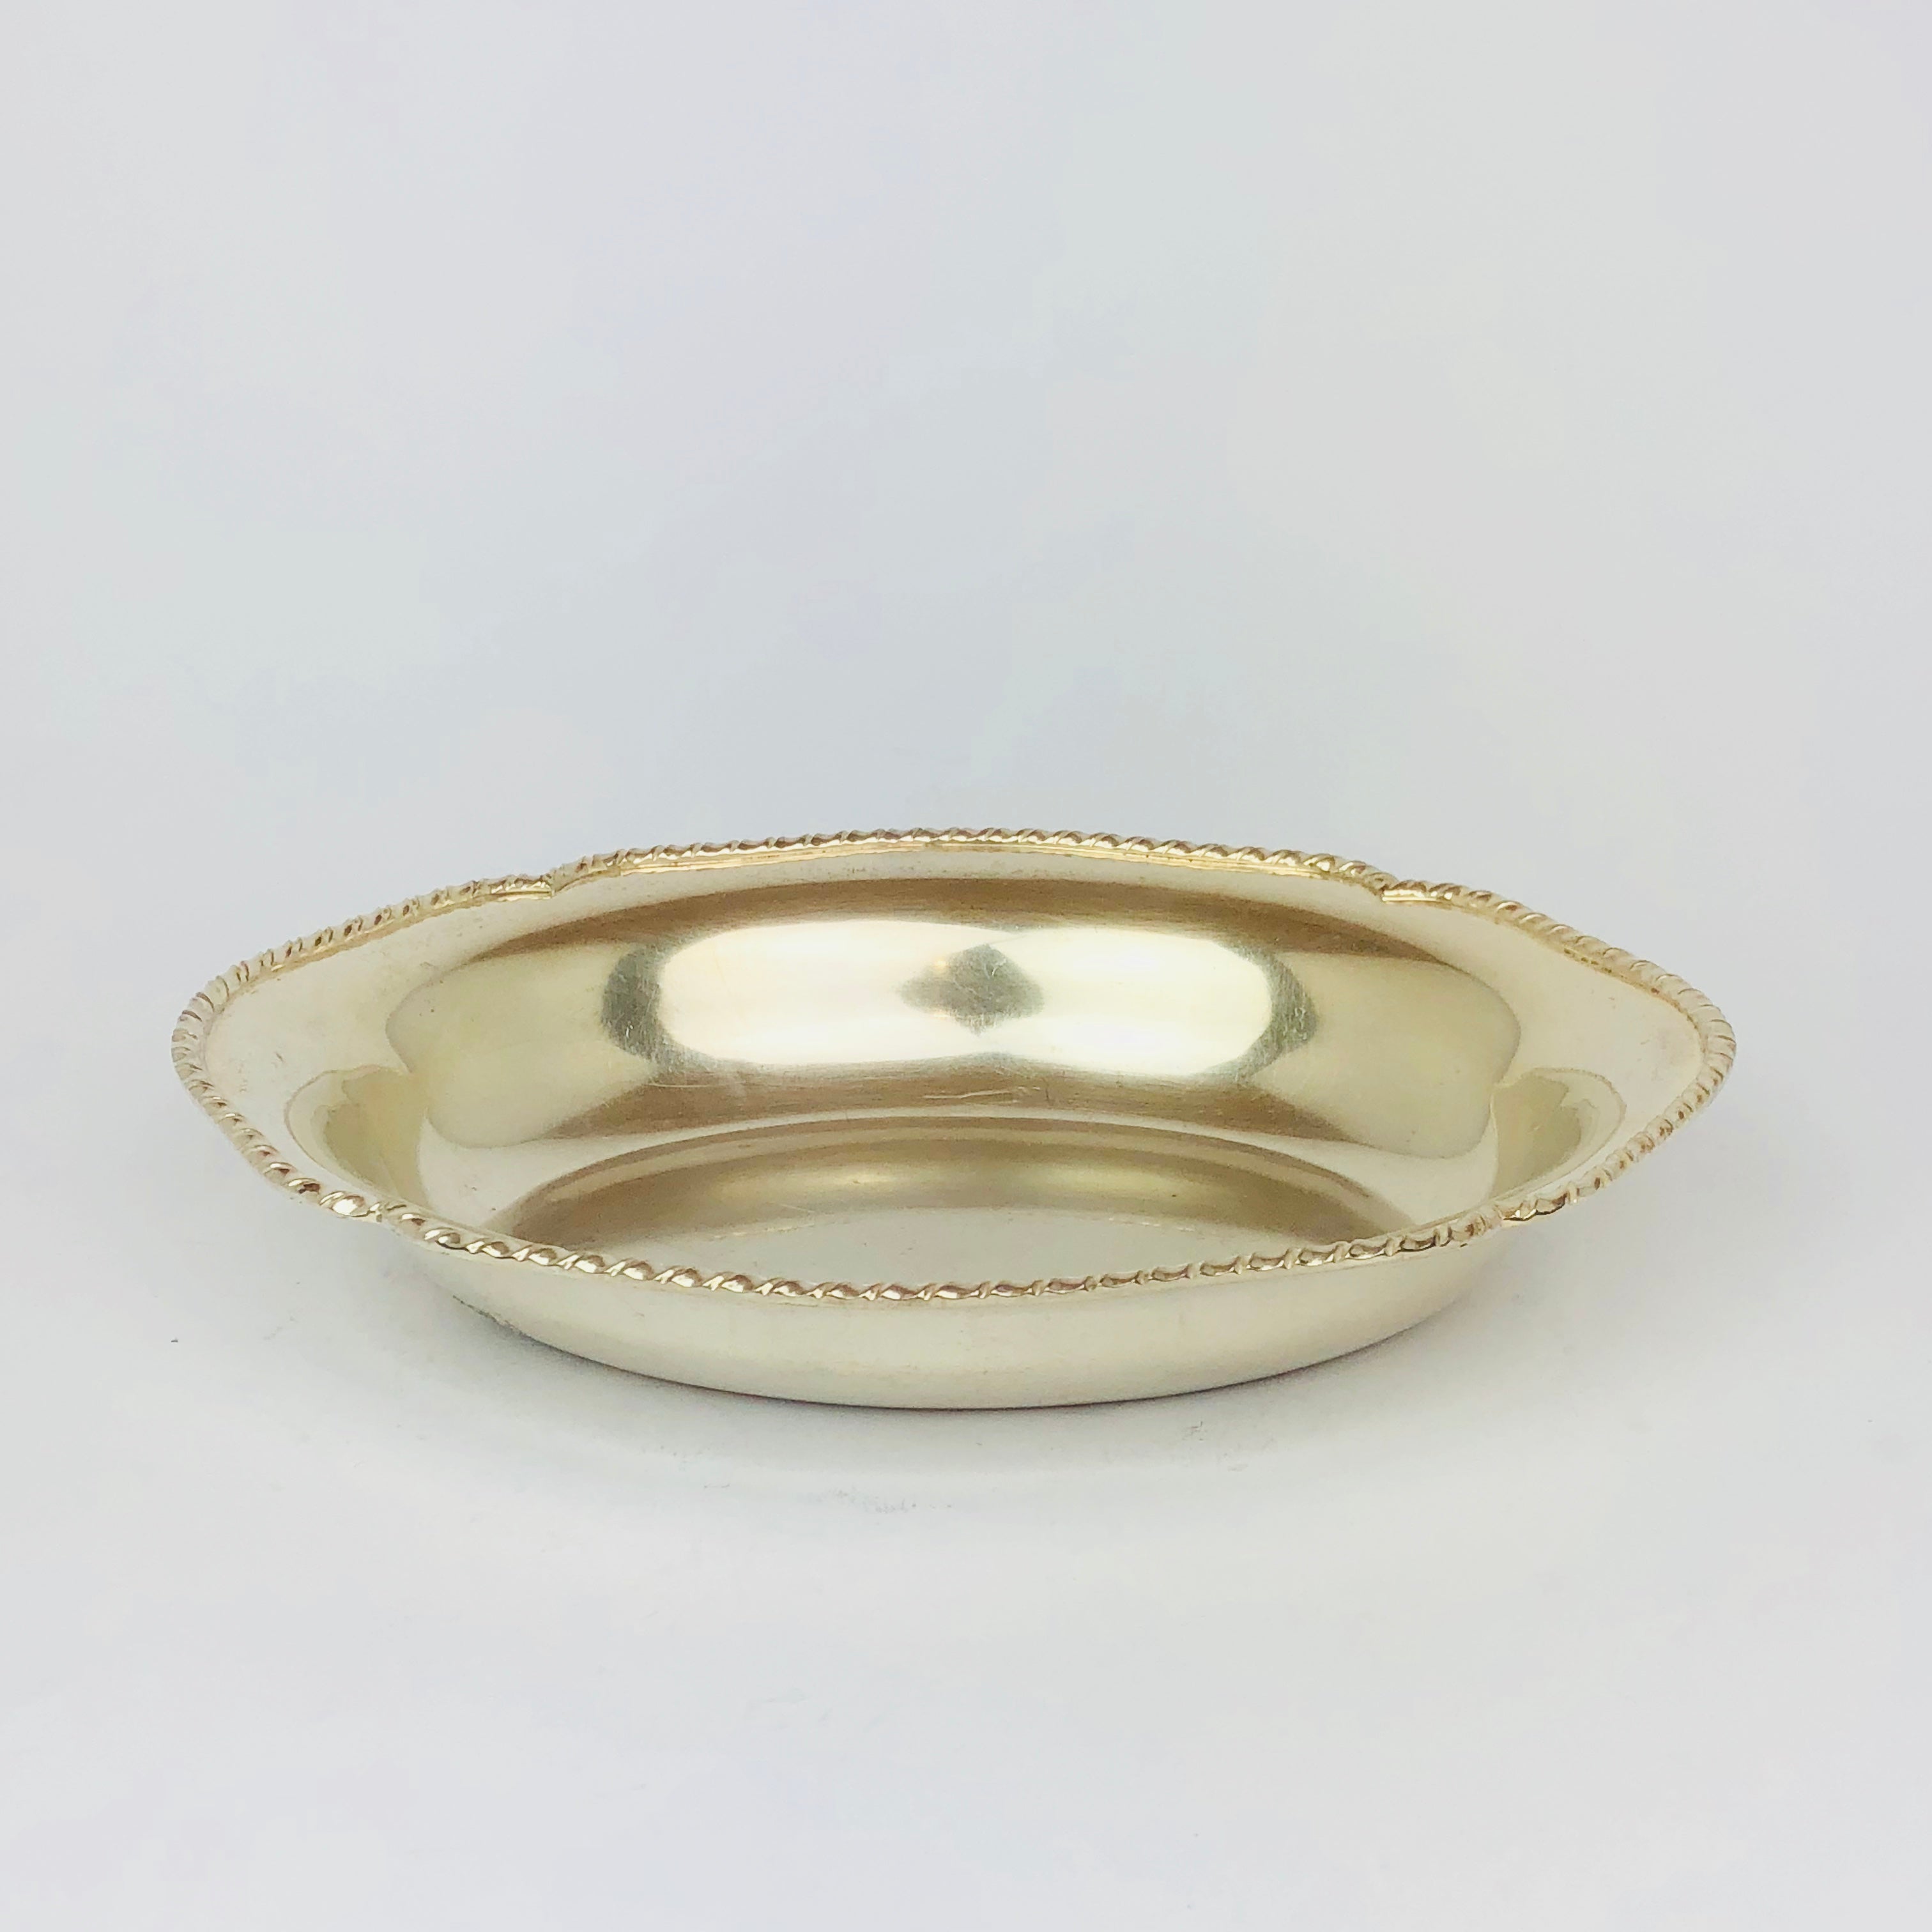 Ciotola forma ovale stile antico argento 800